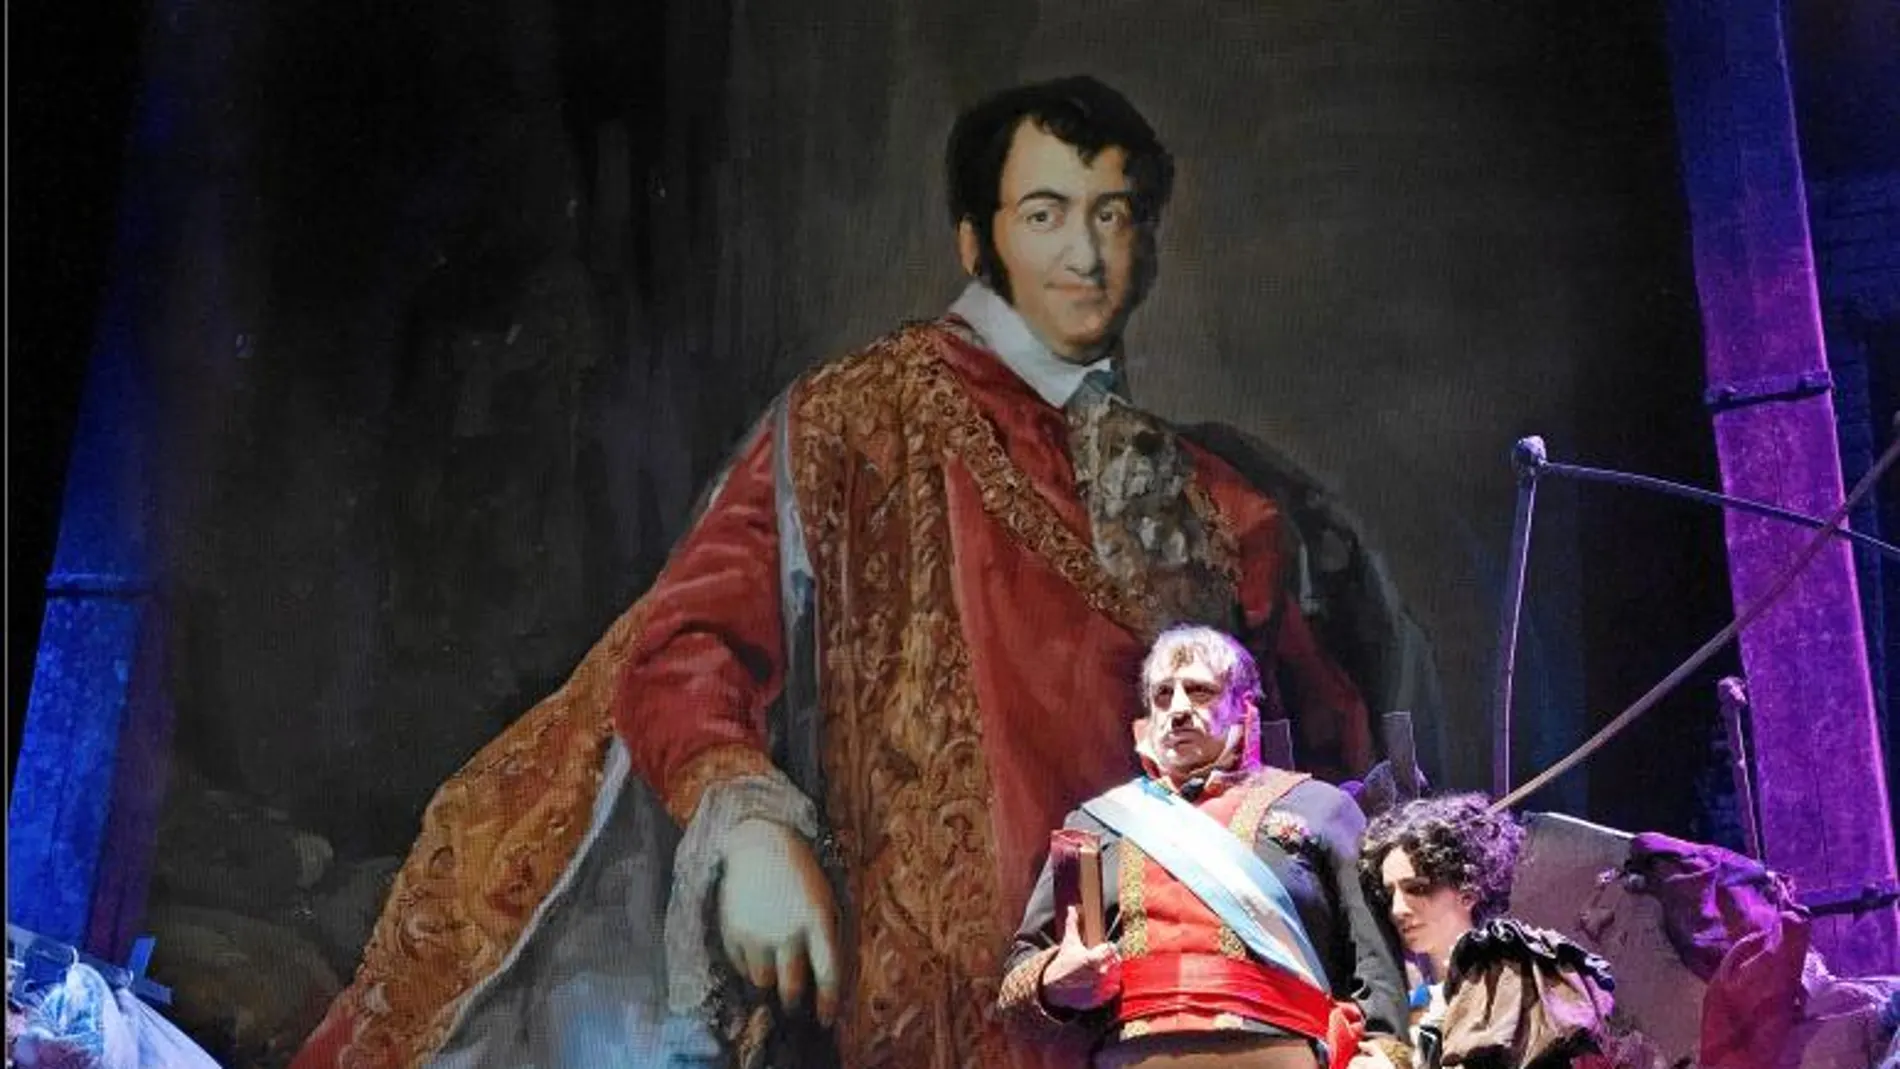 Fernando Albizu (arriba a la derecha) da vida a Fernando VII en esta comedia atípica y crítica